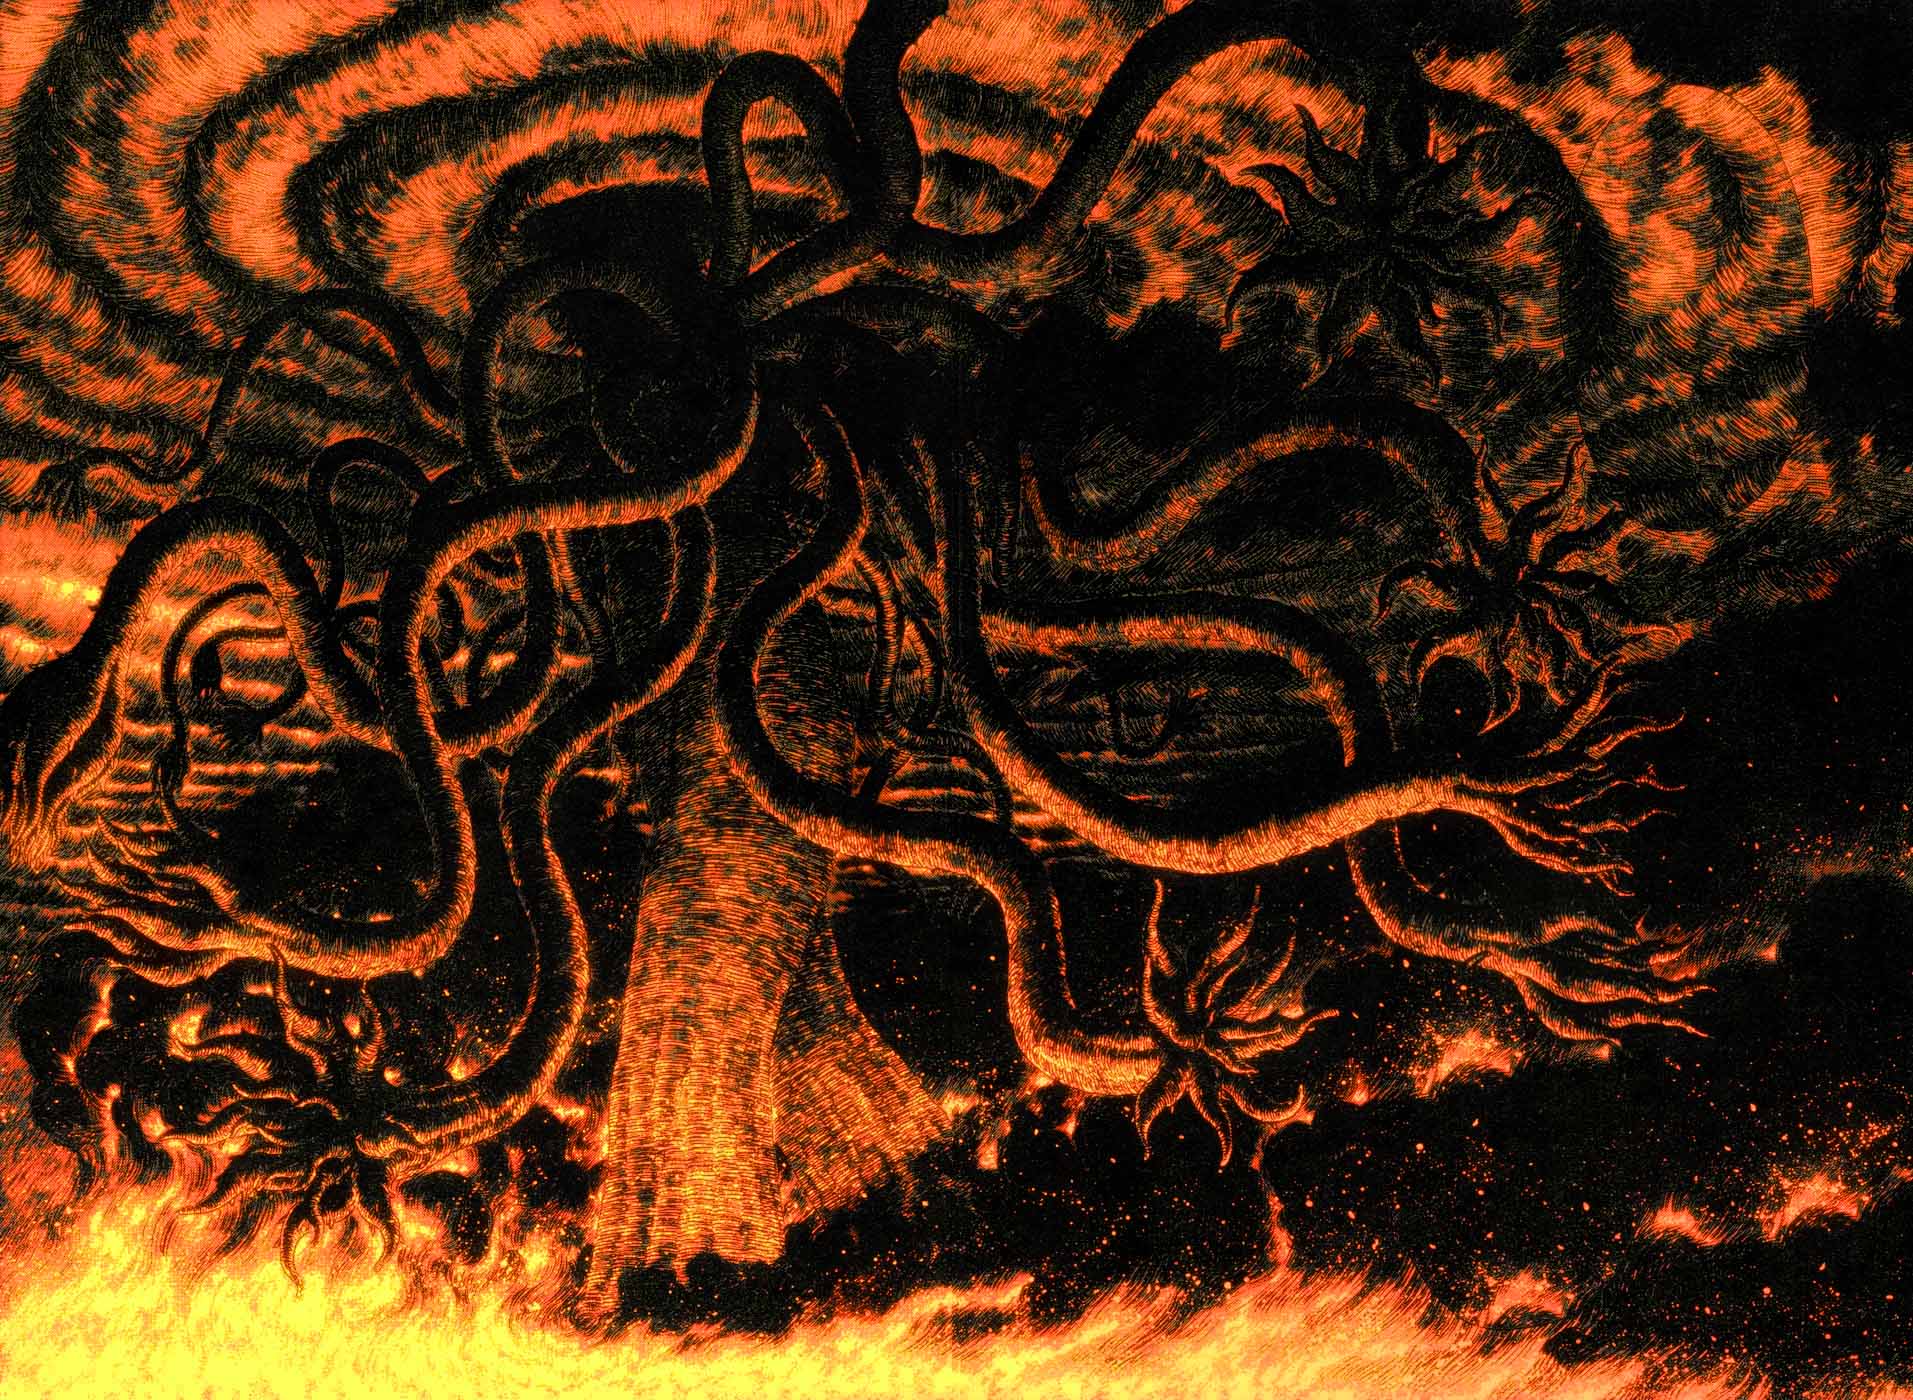 Dark fantasy artwork showcasing a warrior from the anime series 'Berserk'.